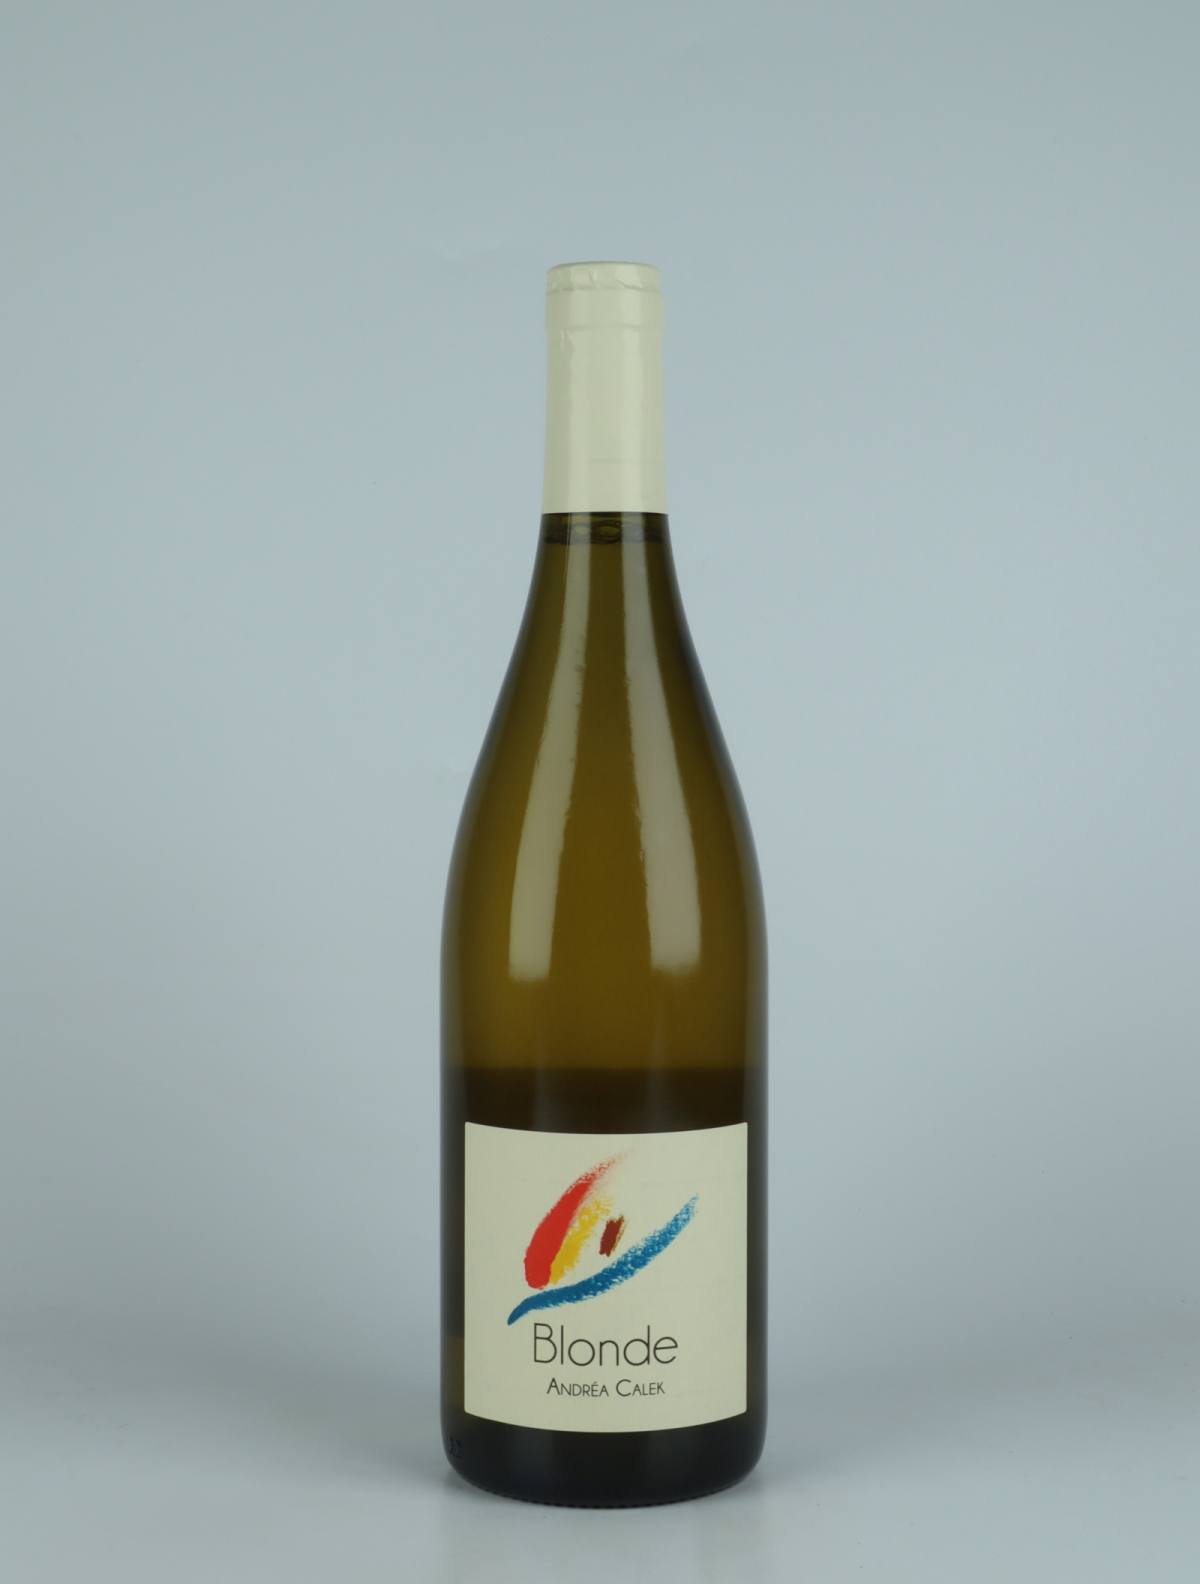 A bottle 2022 Blonde White wine from Andrea Calek, Ardèche in France